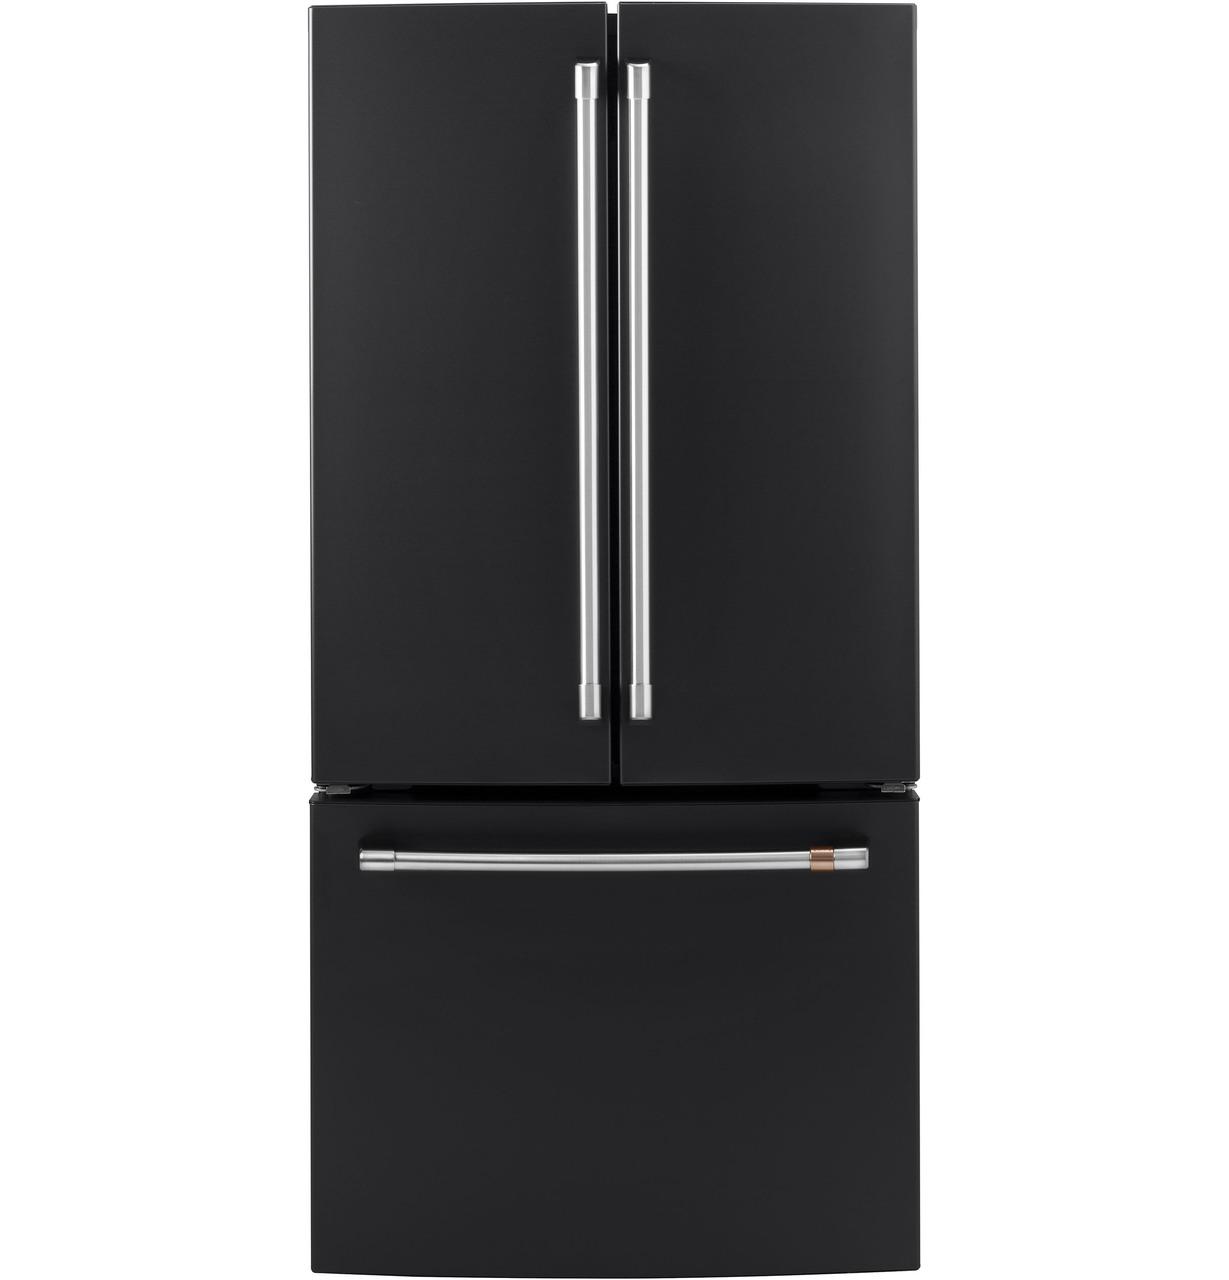 Cafe Caf(eback)™ ENERGY STAR® 18.6 Cu. Ft. Counter-Depth French-Door Refrigerator